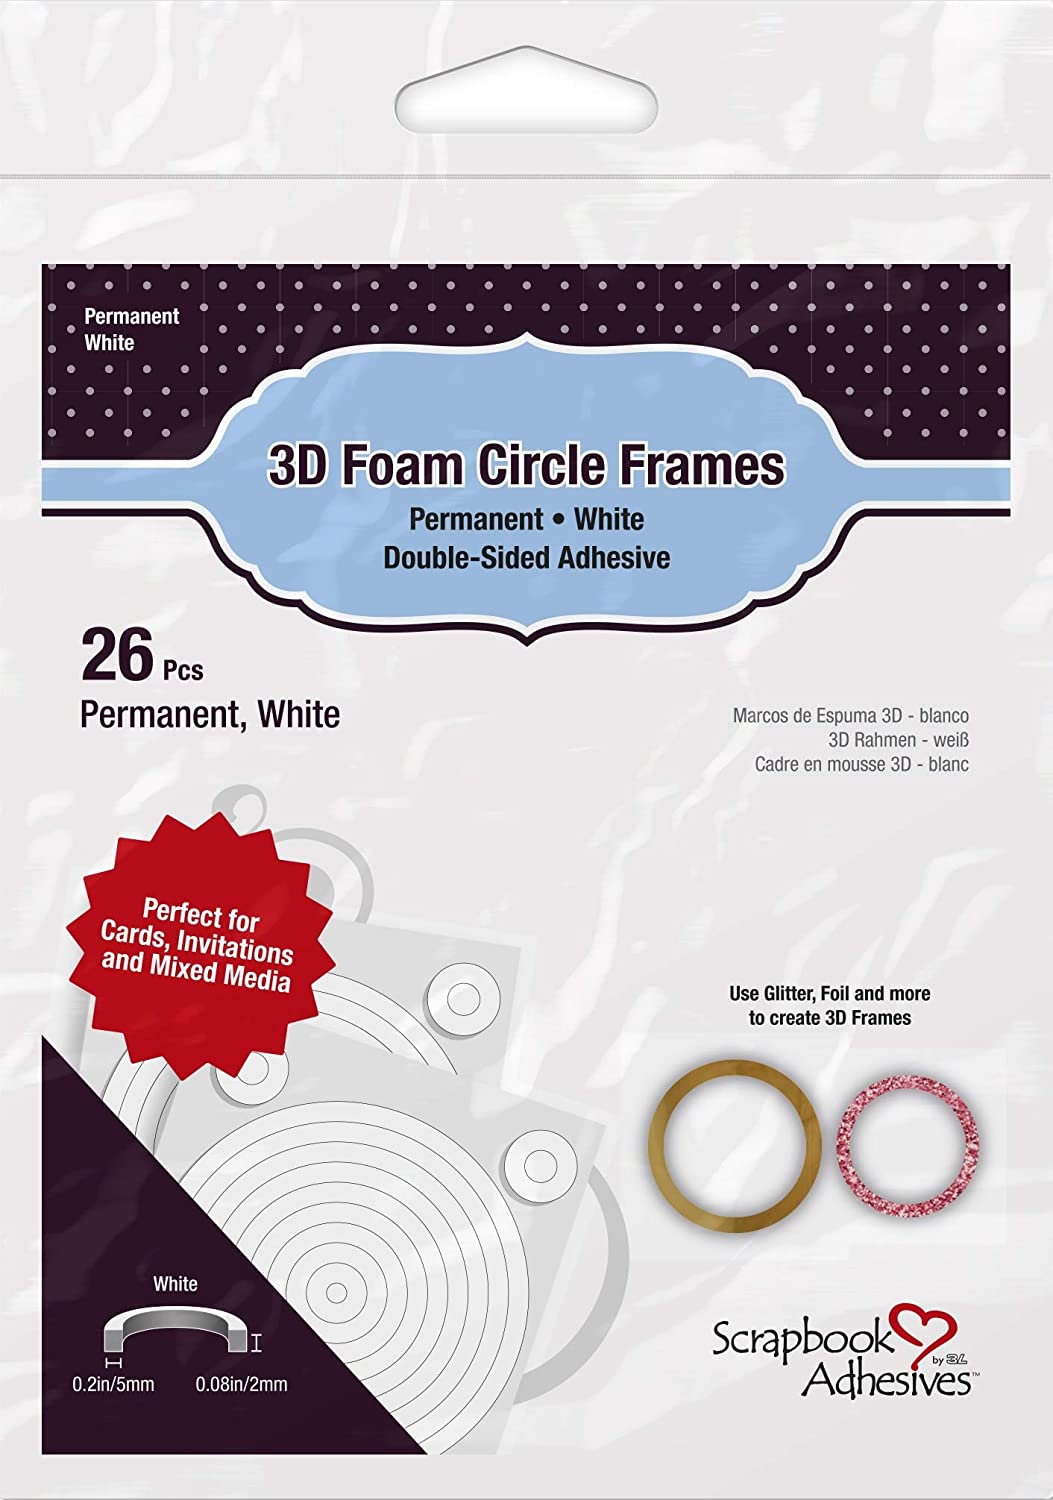 White Adhesive foam Circles